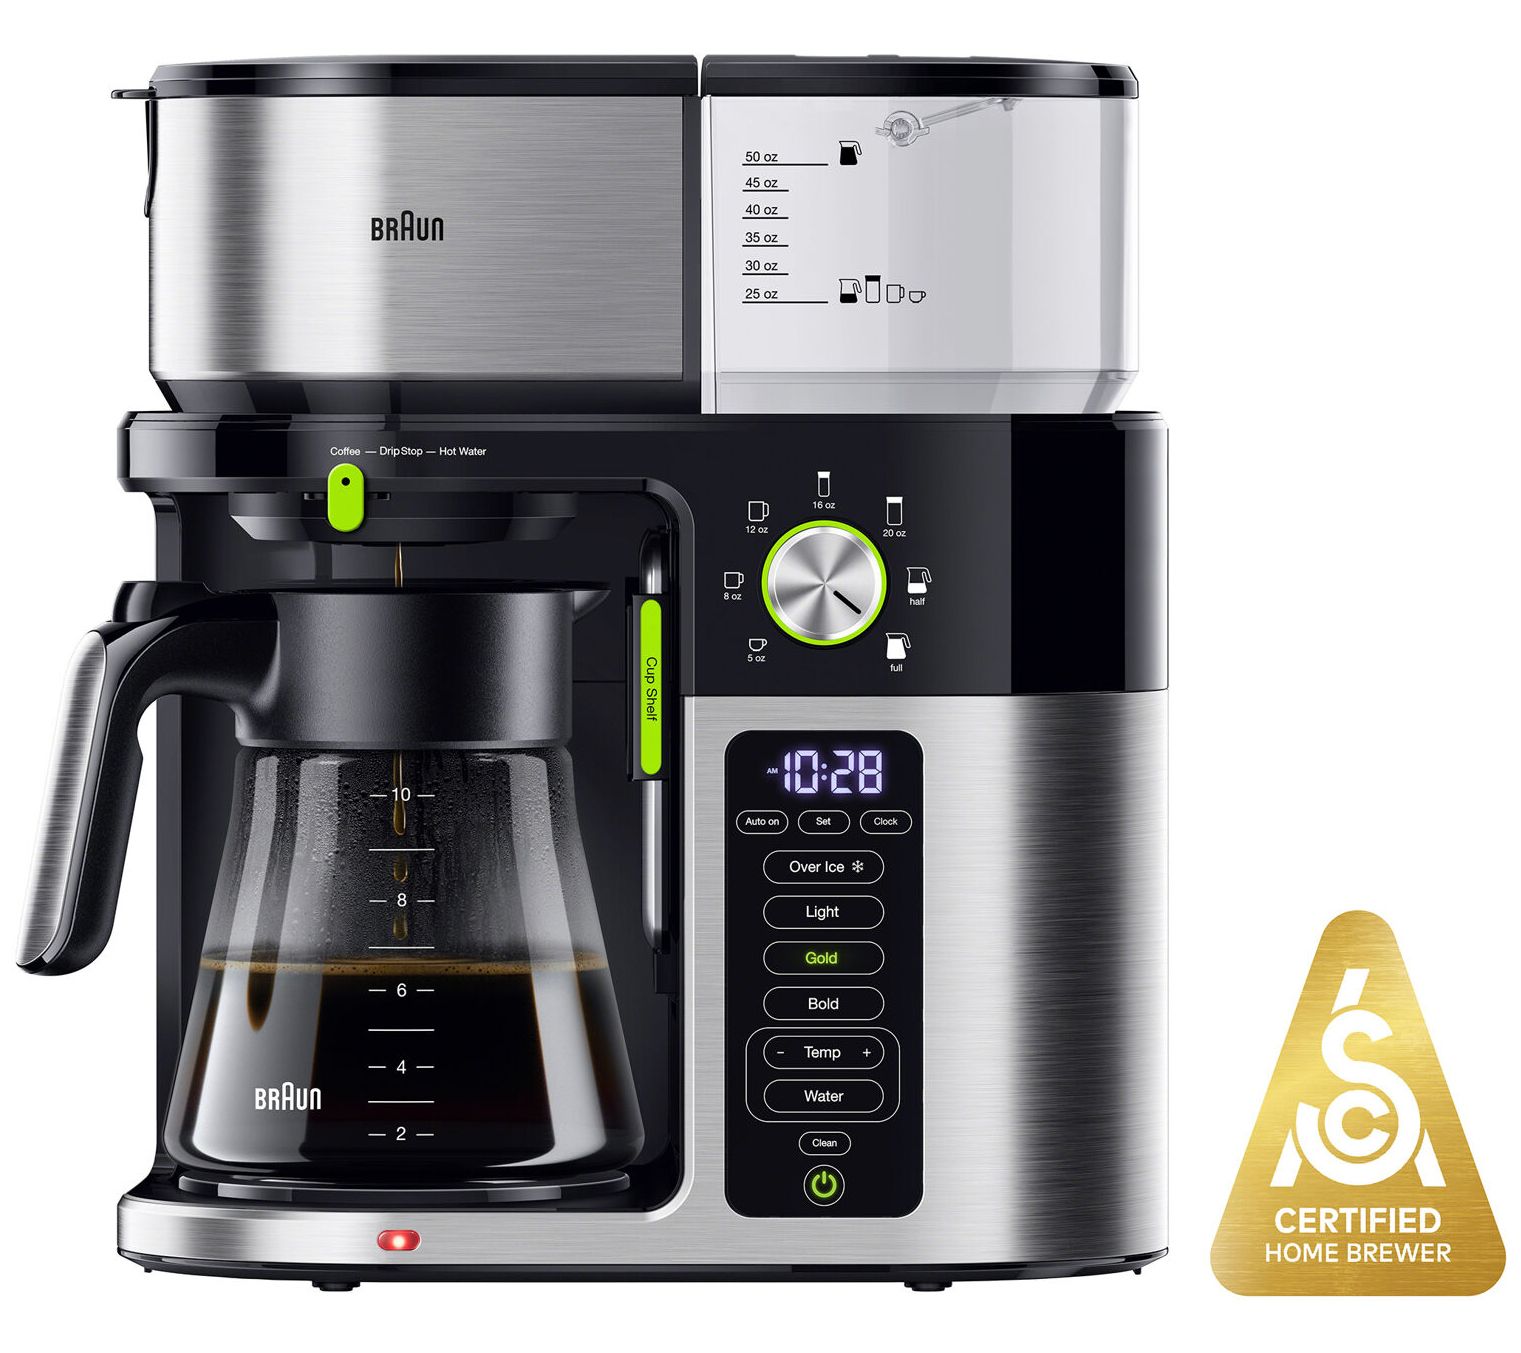 Braun MultiServe 10-Cup Coffee Maker - QVC.com